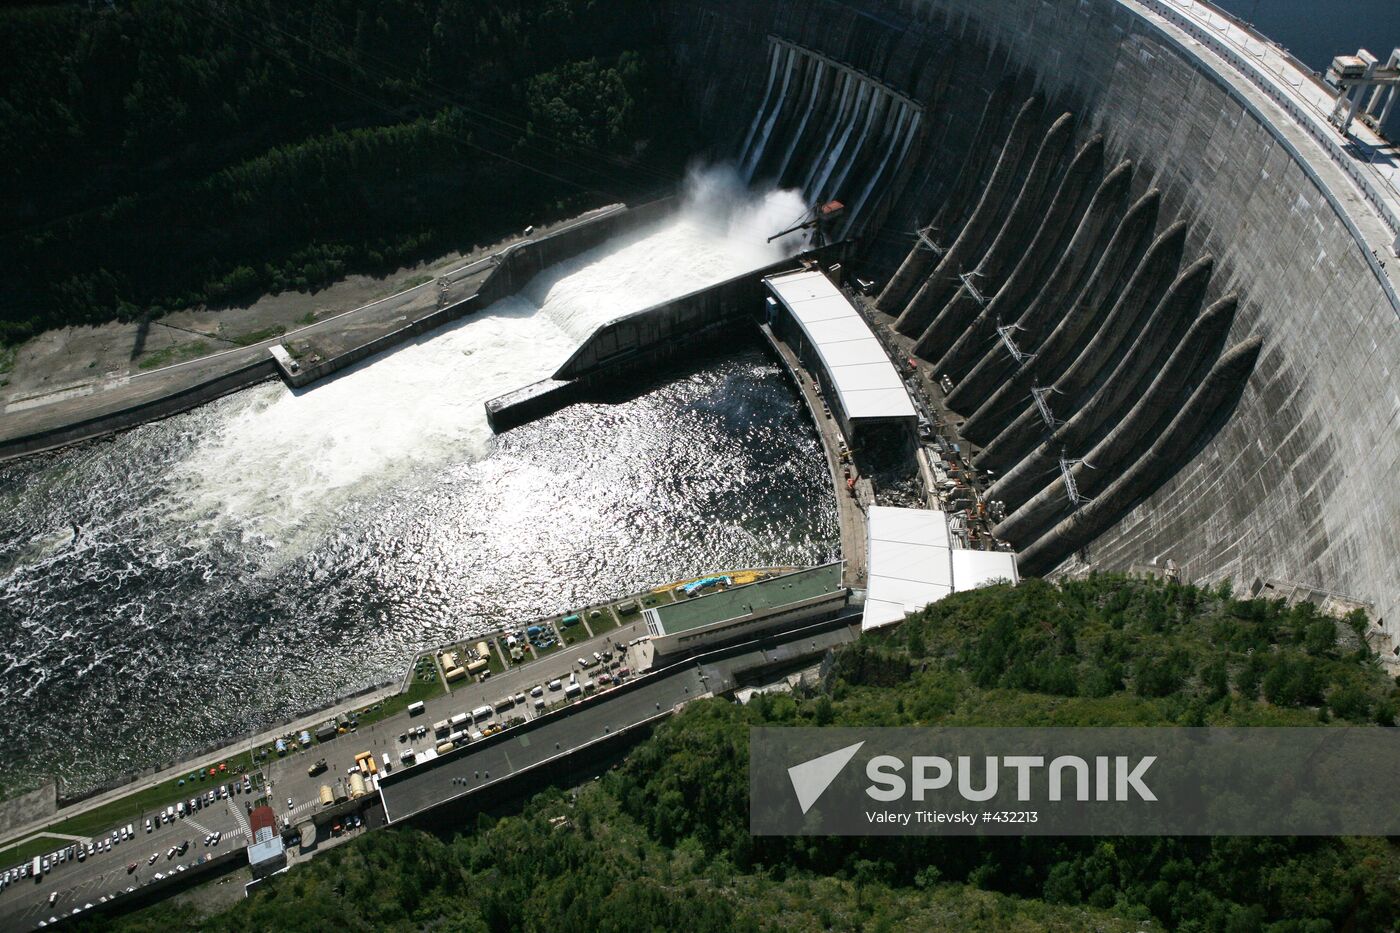 Sayano-Shushenskaya hydropower plant